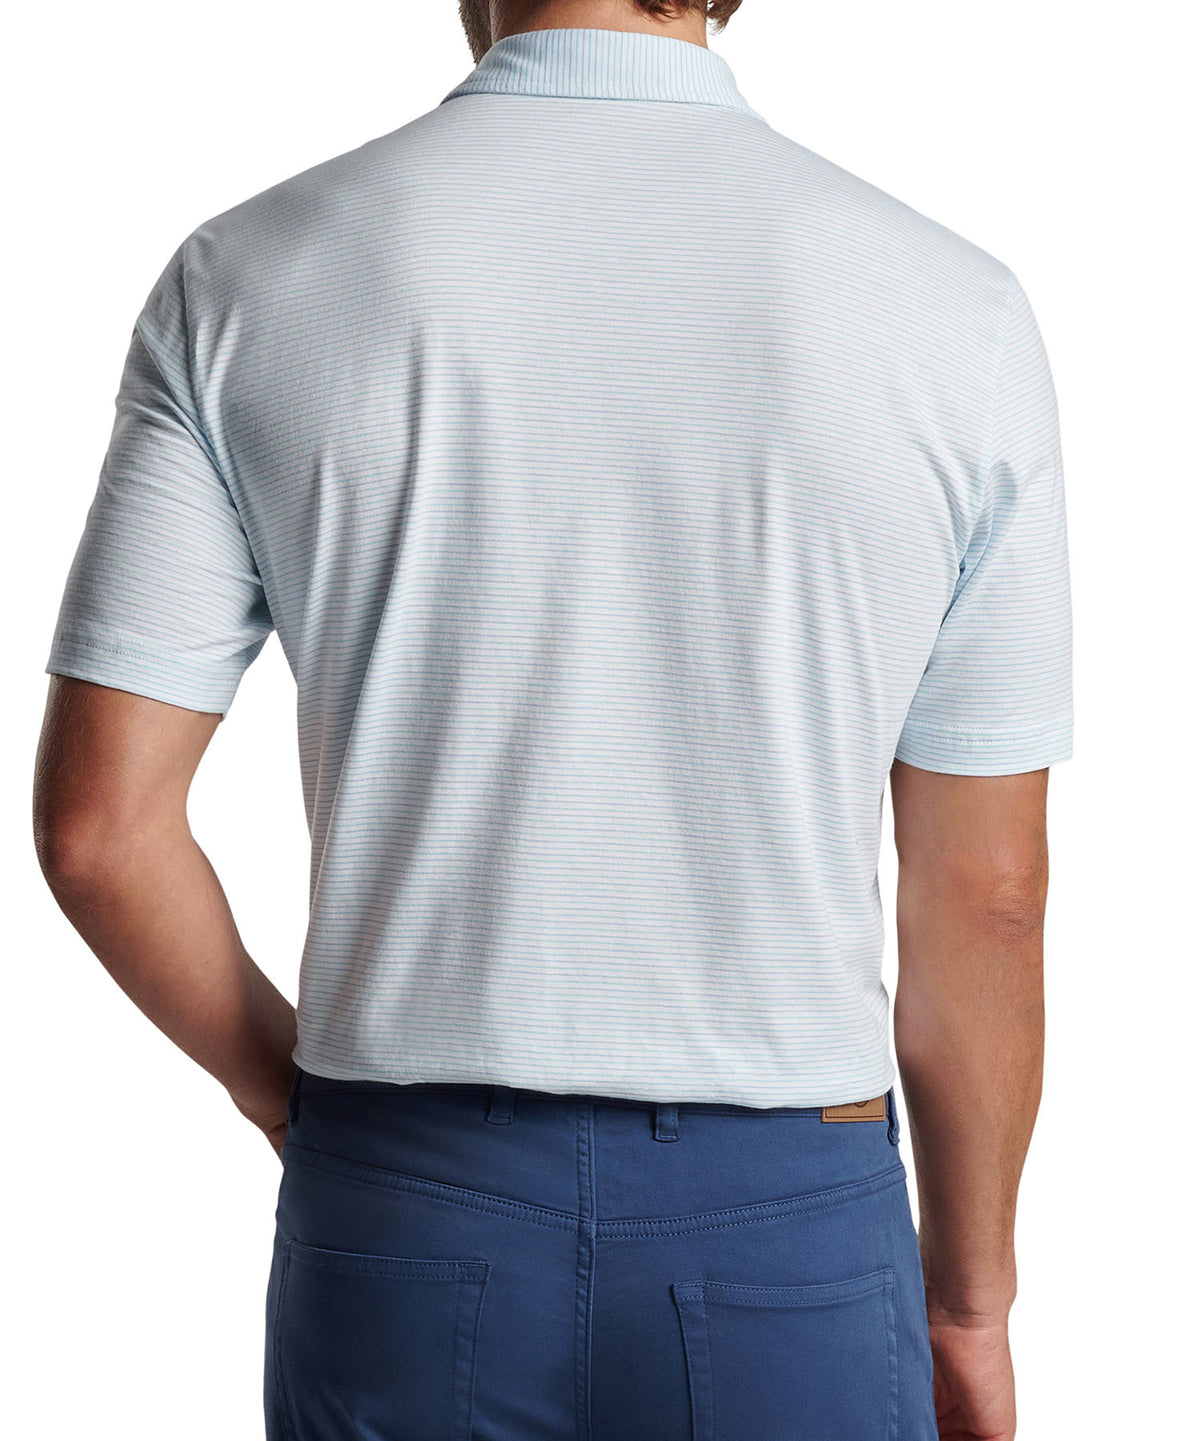 Peter Millar Short Sleeve Pilot Mill Stripe Polo Knit Shirt, Big & Tall